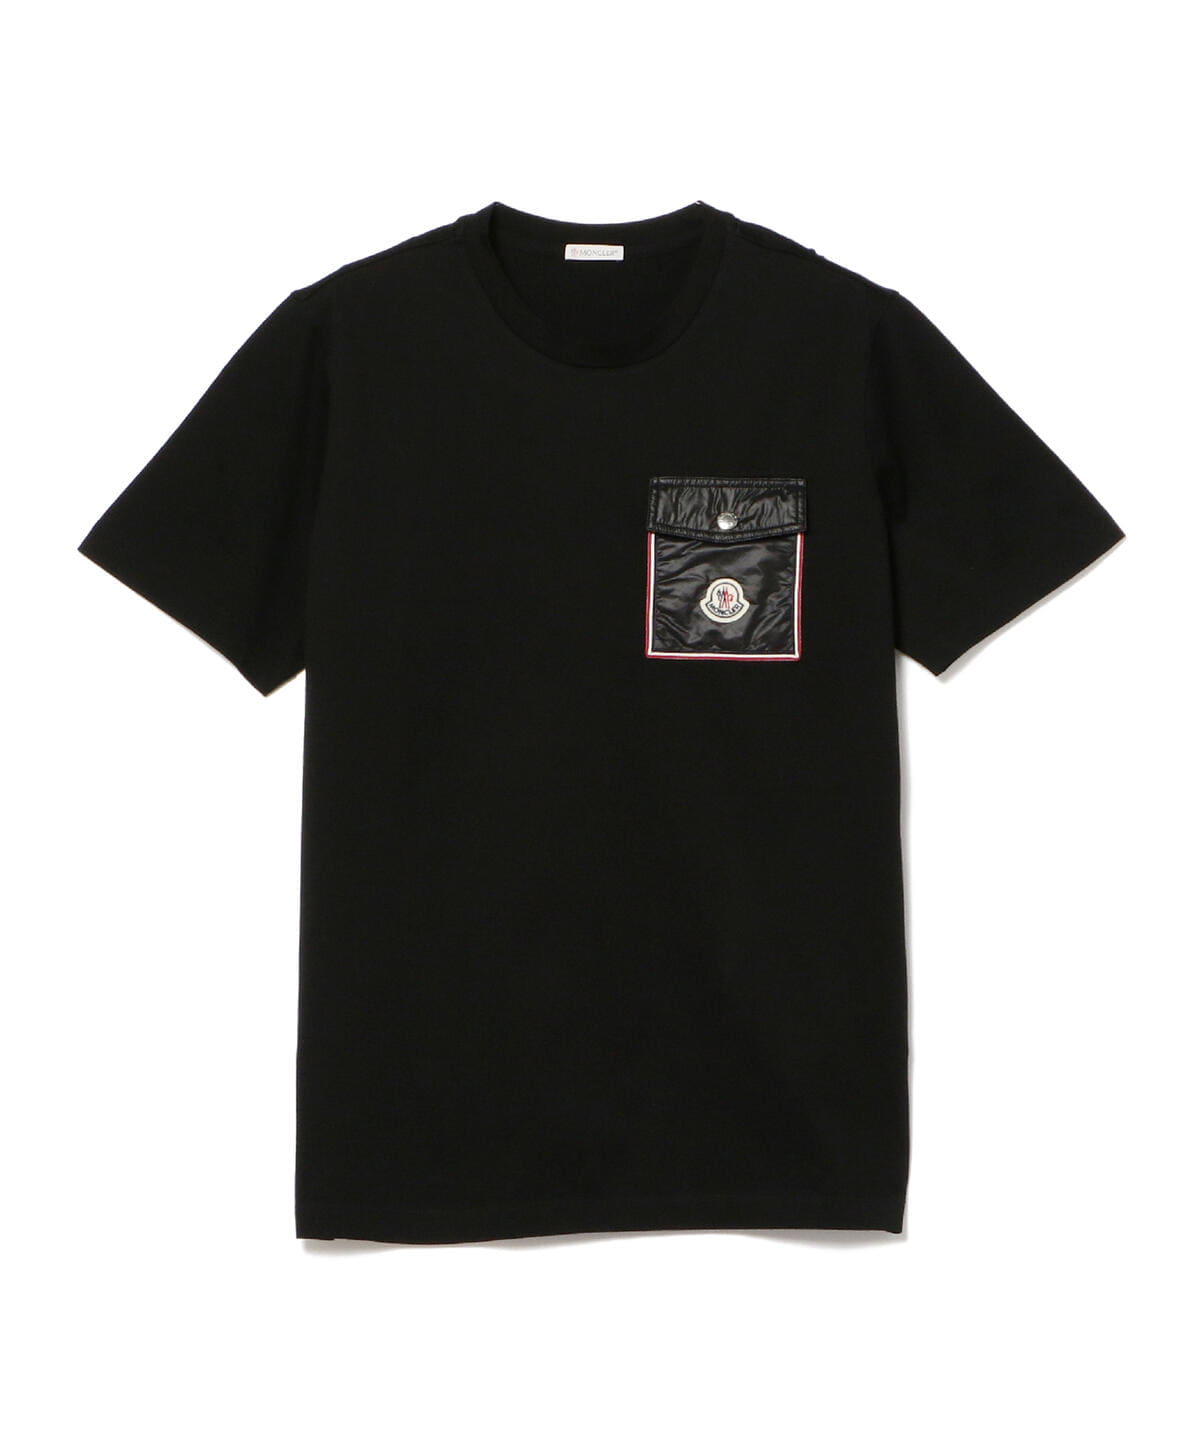 MONCLER / フラップポケット ロゴ クルーネック Tシャツ